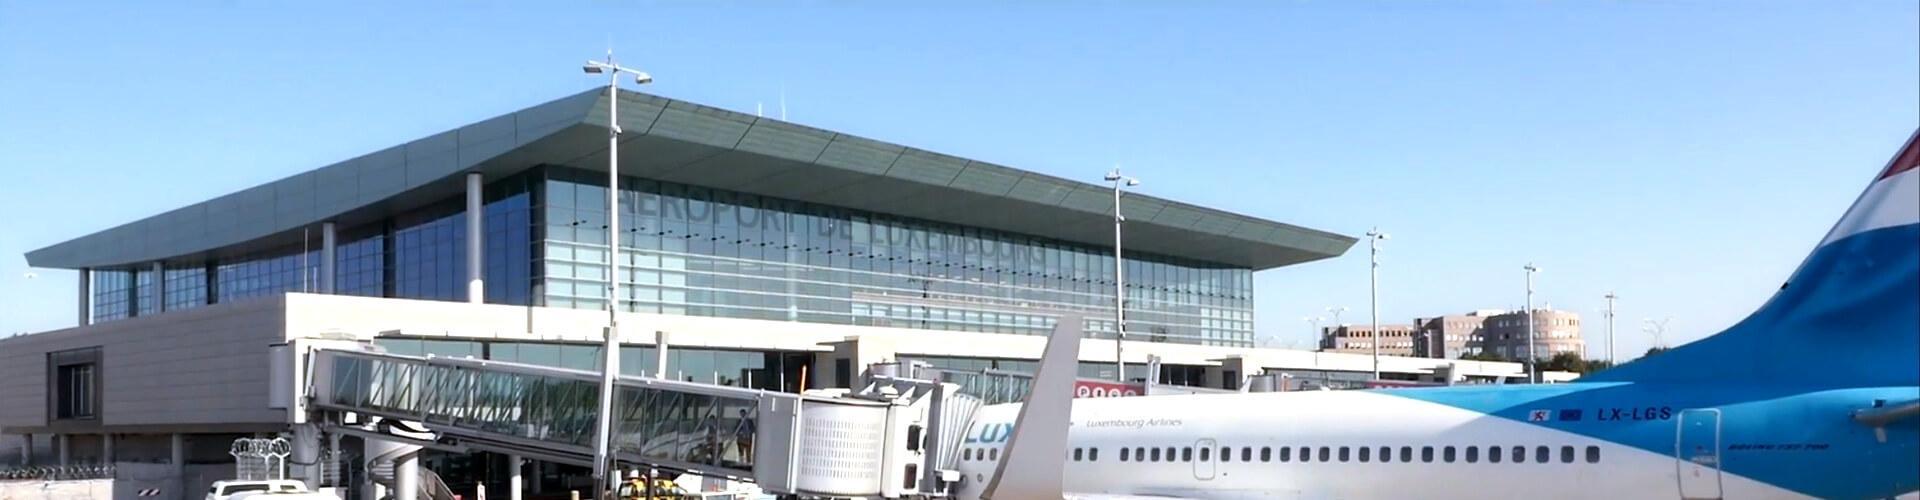 Lux-Airport Corporate Website Kopfzeile